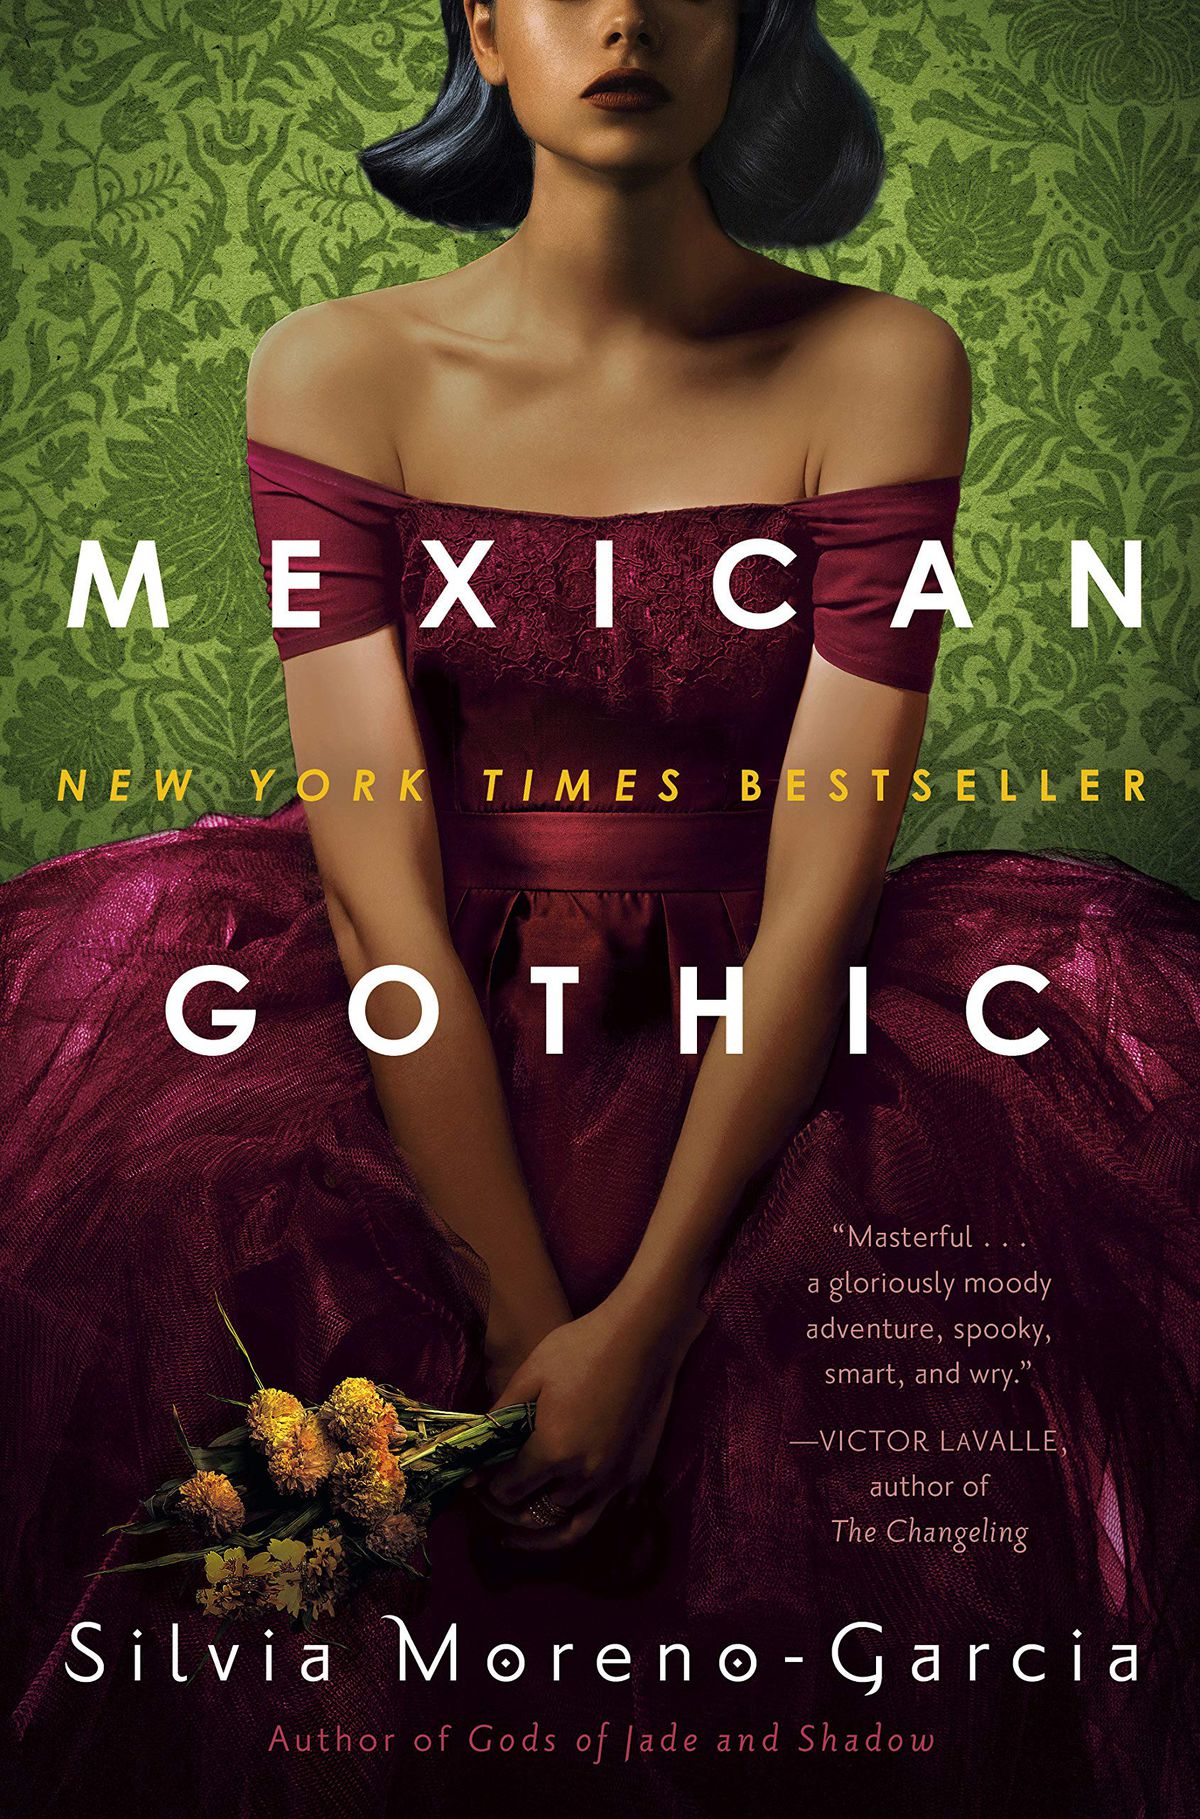 Couverture du gothique mexicain de Silvia Moreno-Garcia